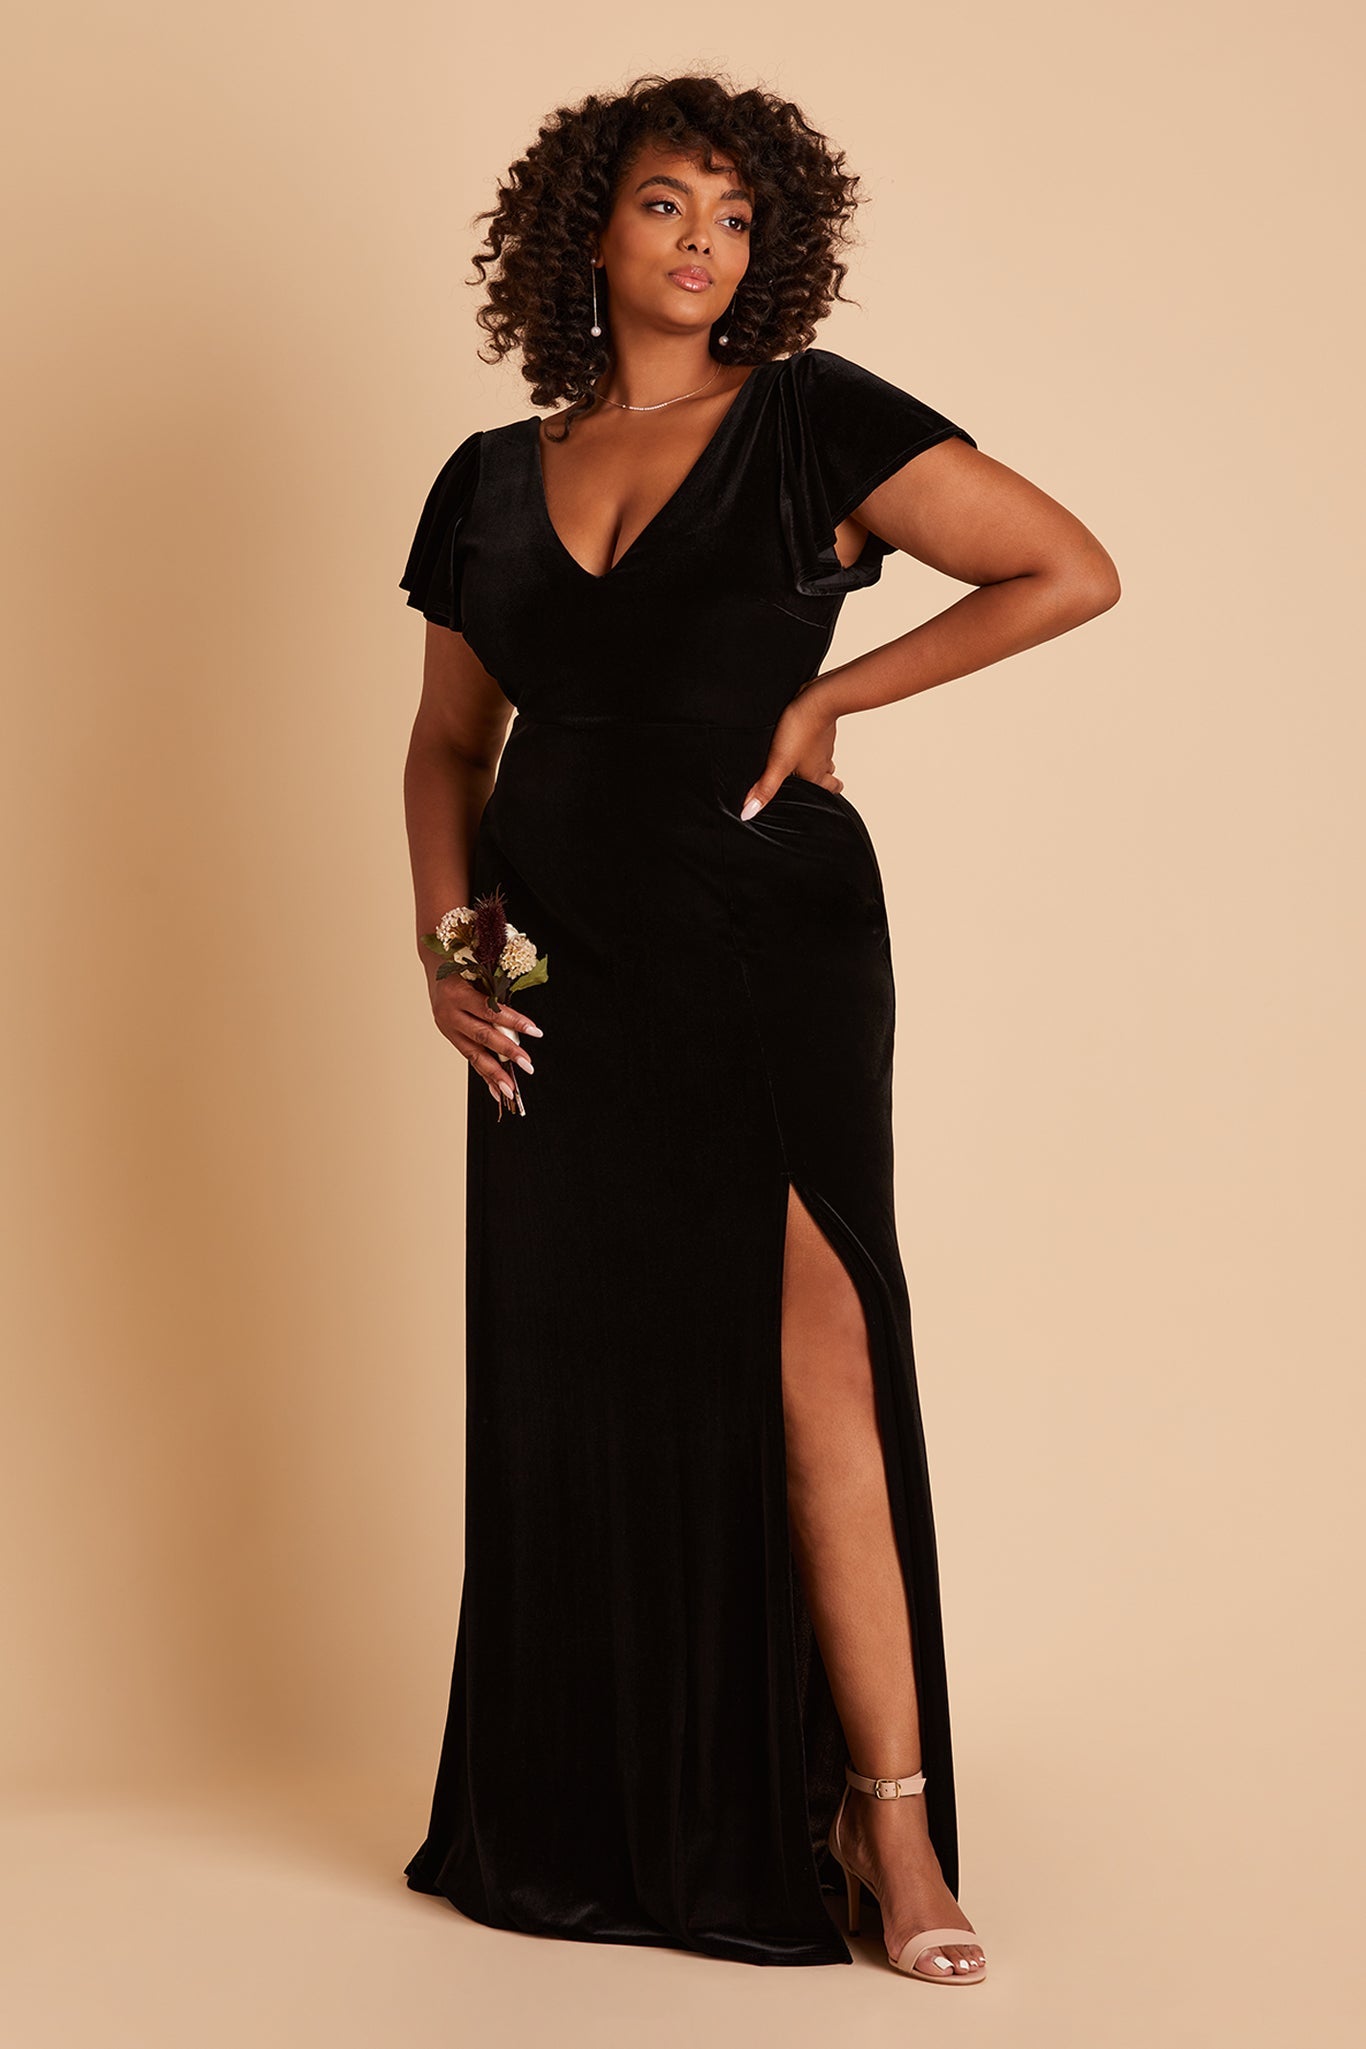 Buy Velvet A-LINE Gown V.Neck for Womens Black Colour at Amazon.in